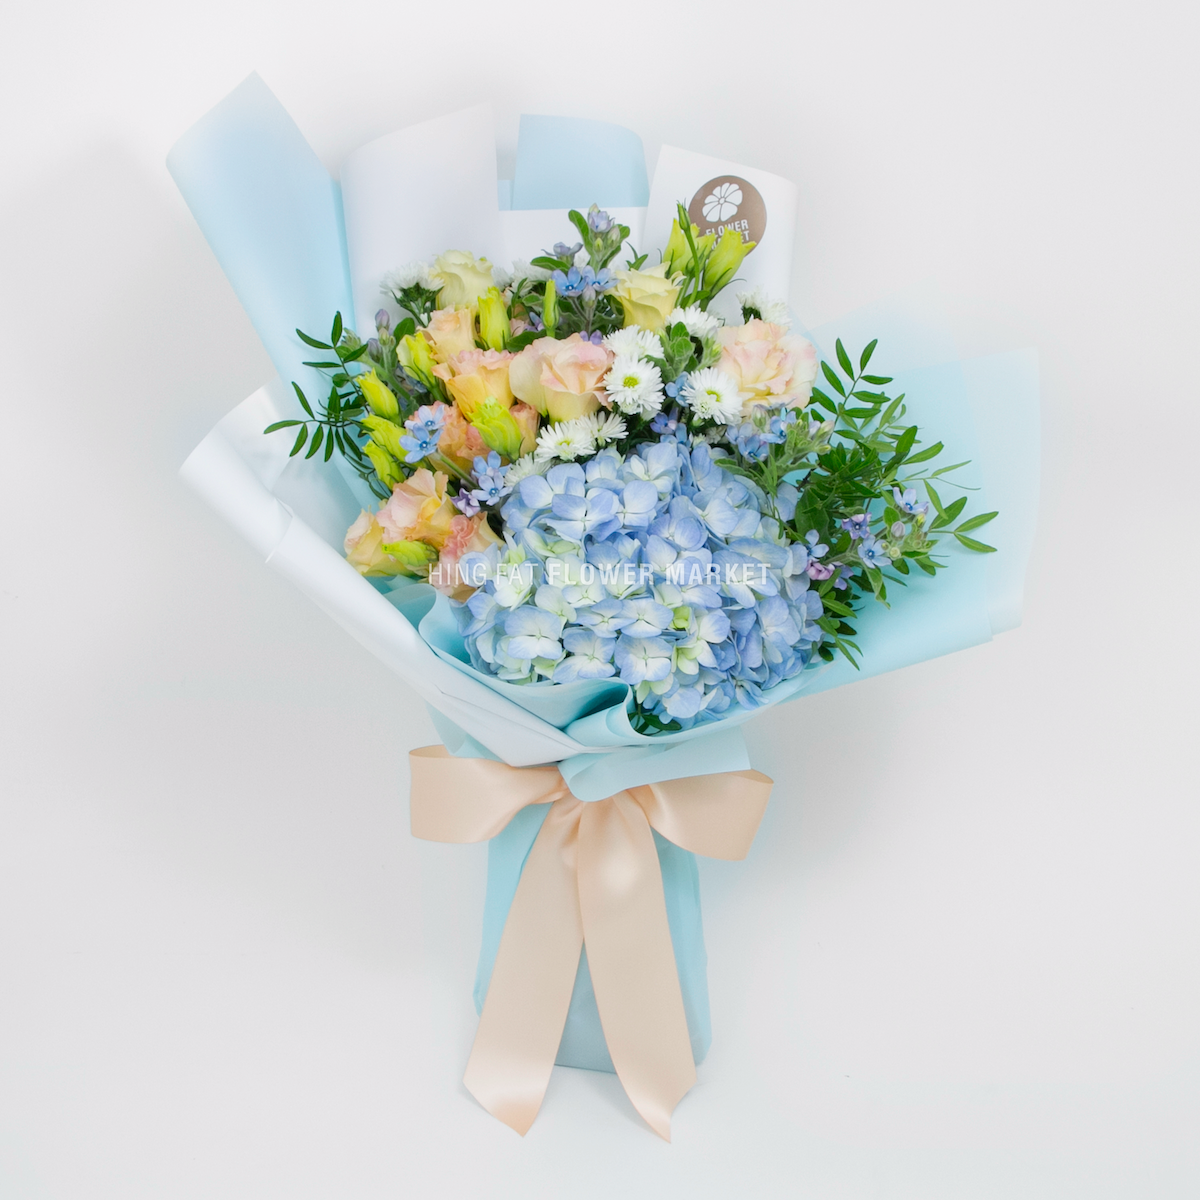 藍繡球藍星花束 Blue hydrangea and tweedia bouquet